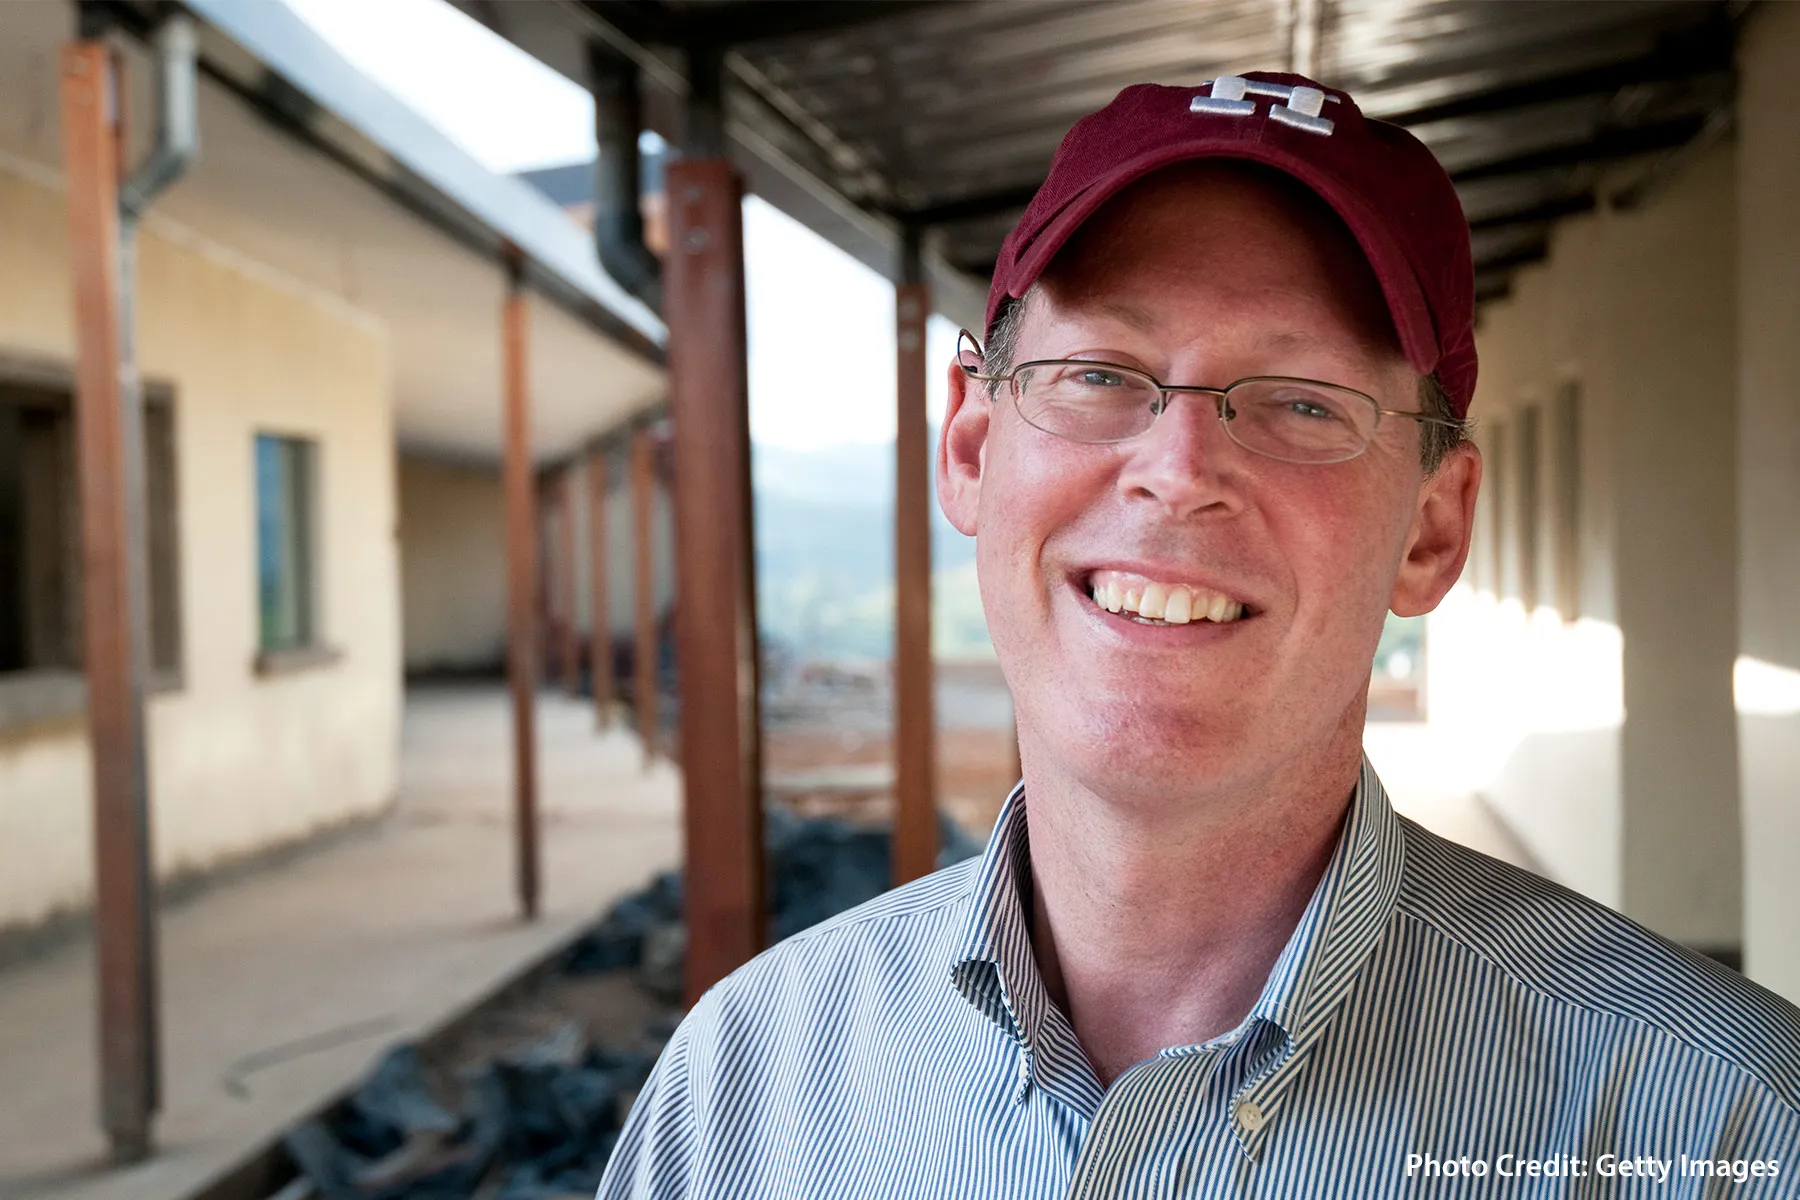 ‘I Just Came Across Kindness’: Humanitarian Paul Farmer Dies